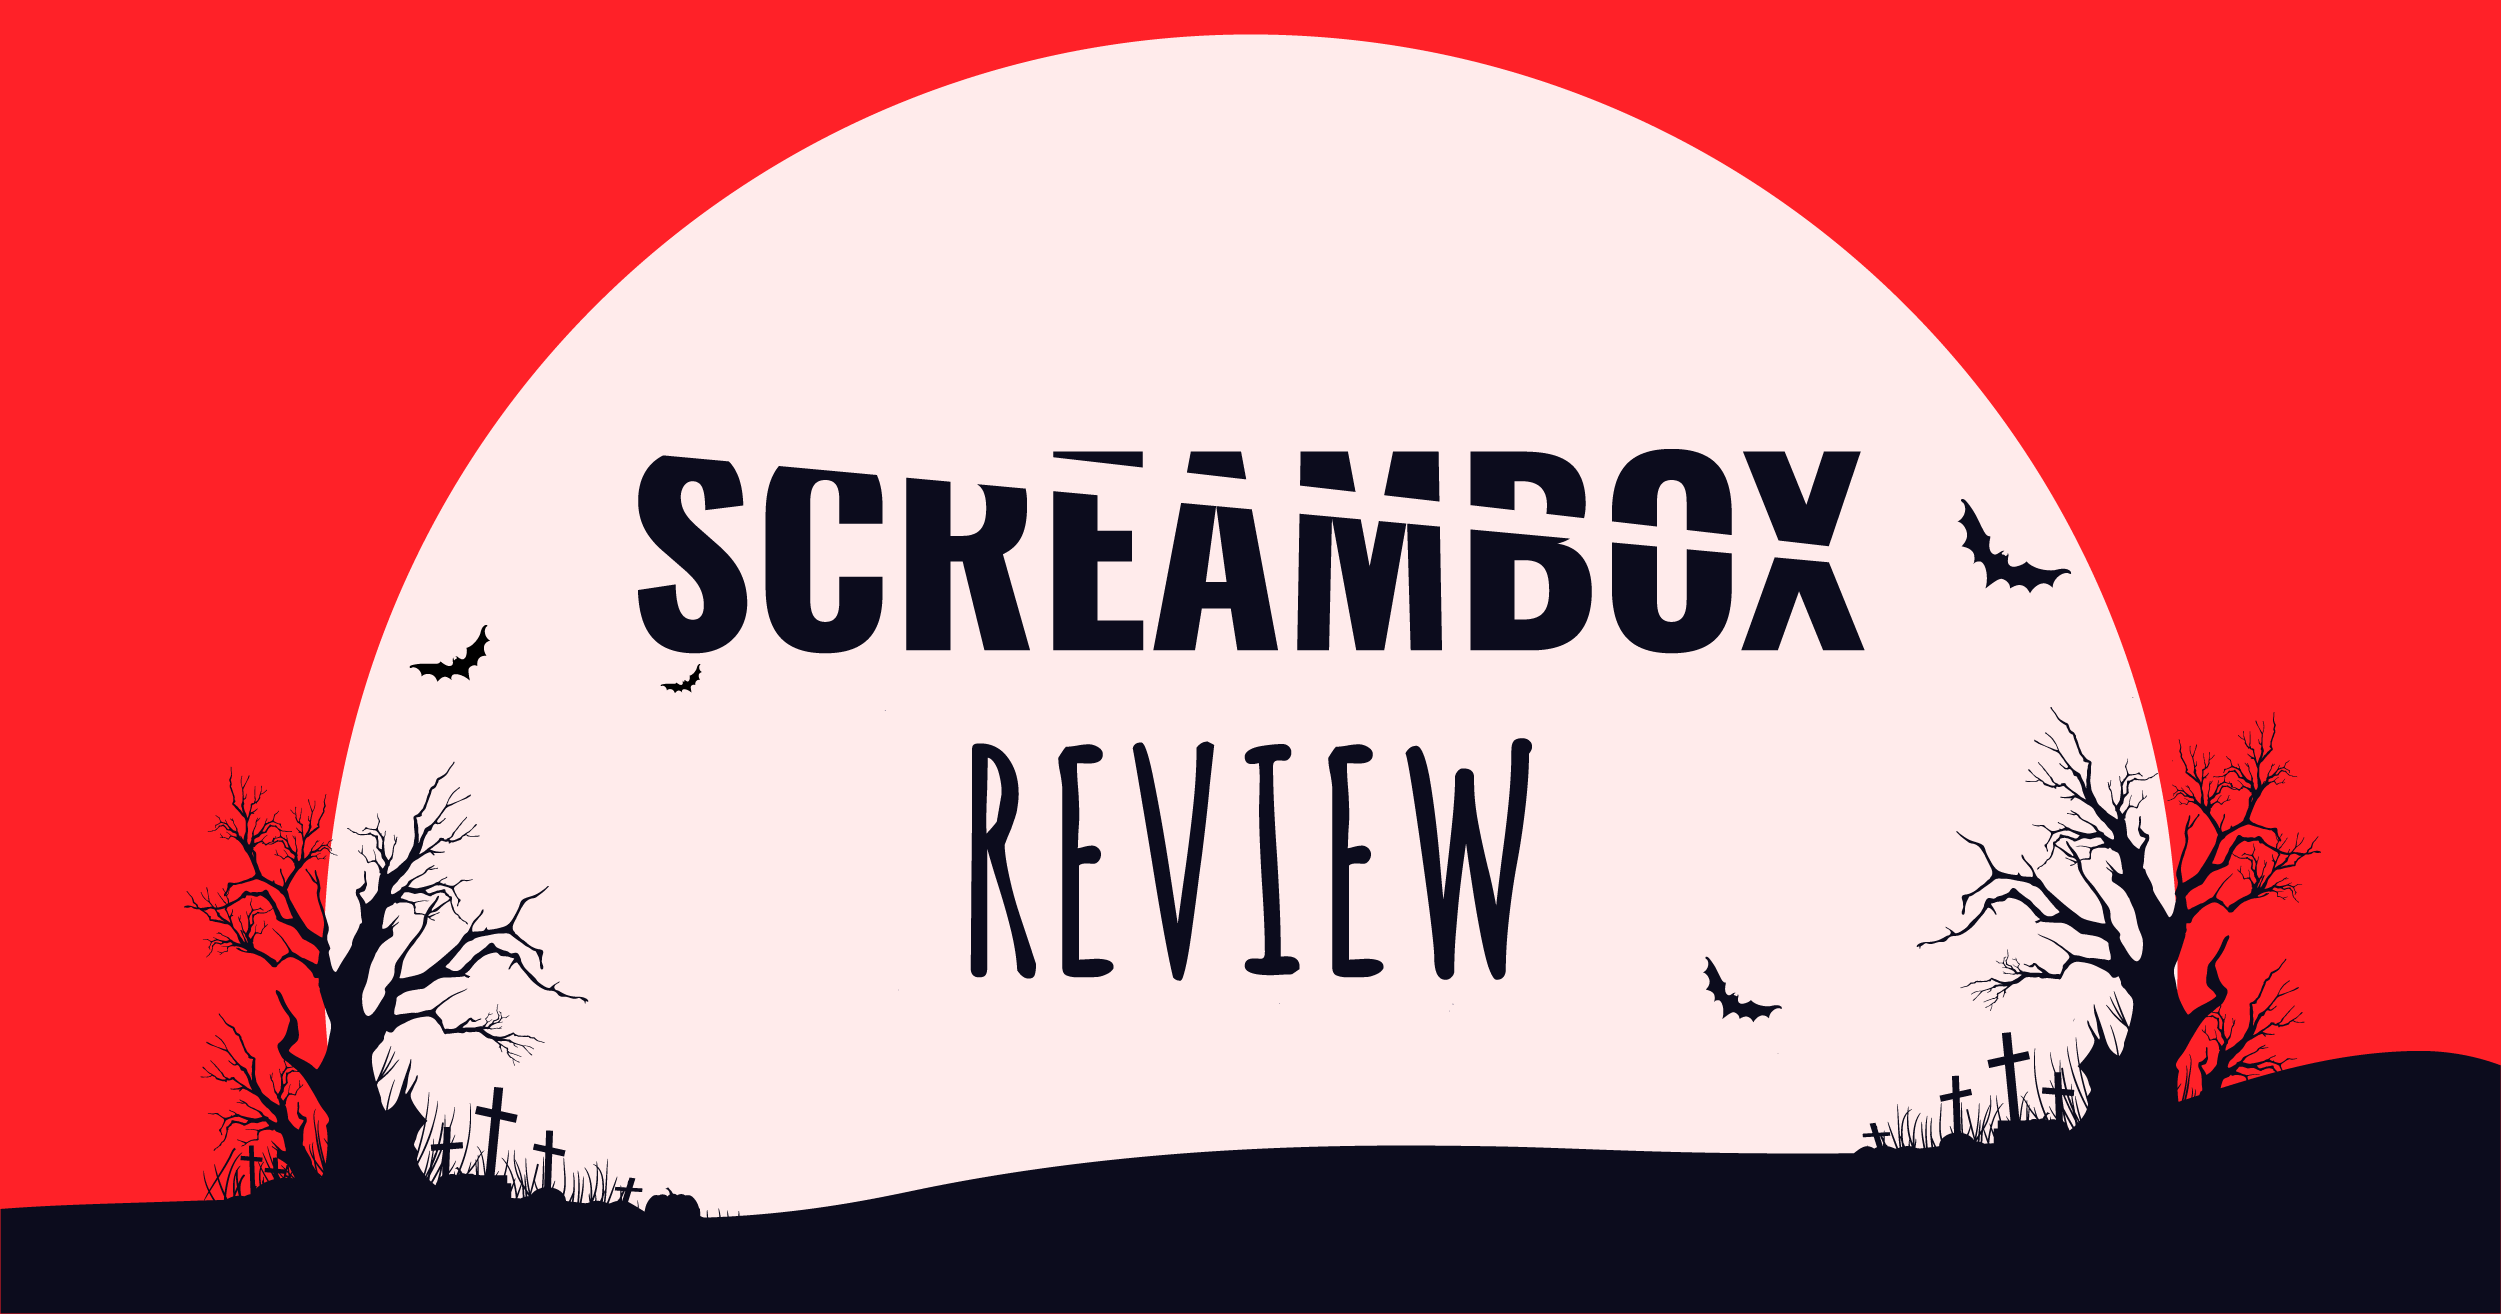 screambox-review